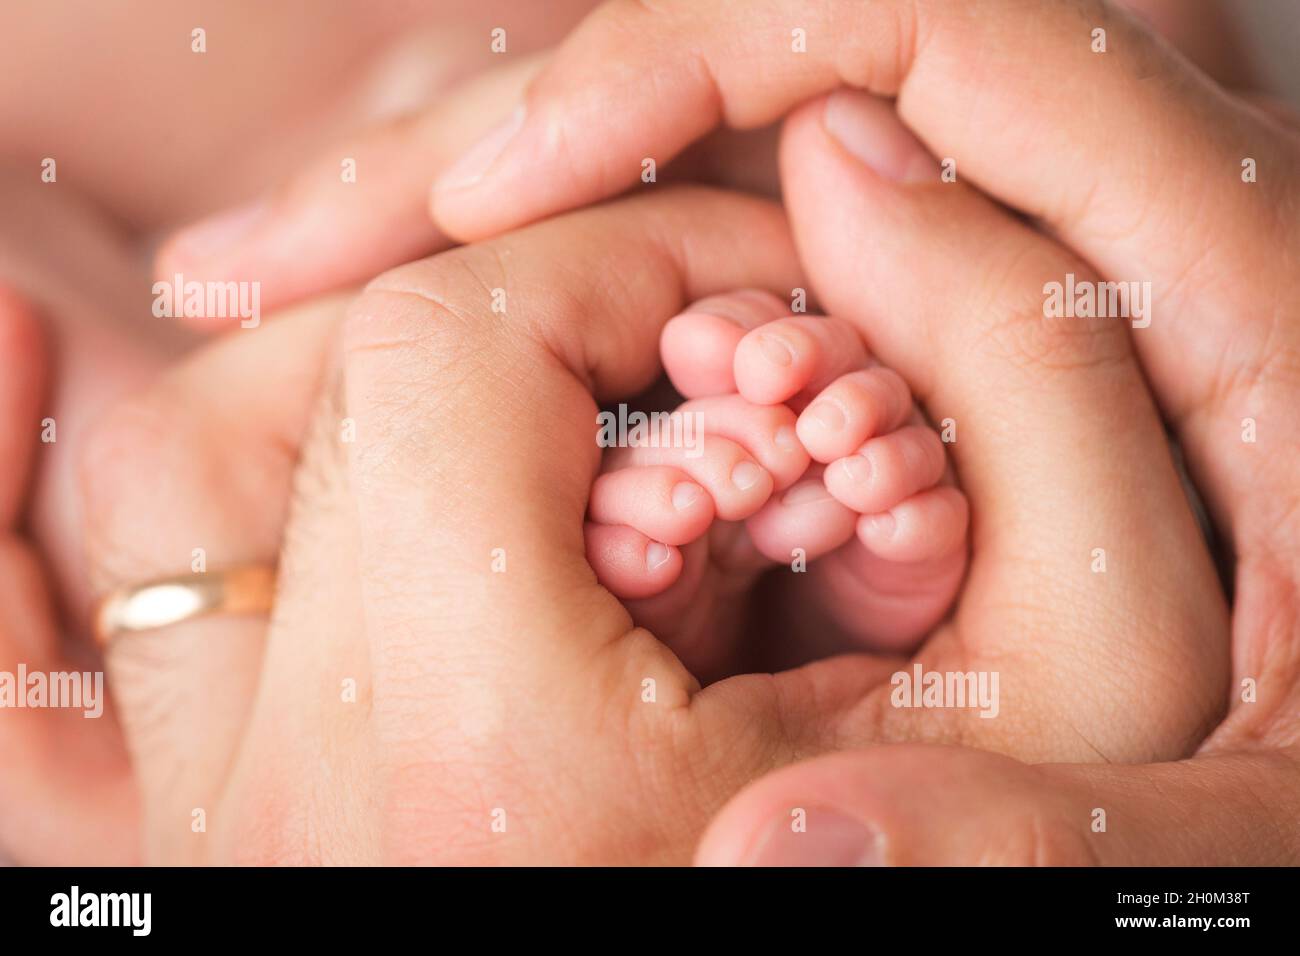 Loving parent hold baby's legs. Happy childhood. Parental care.  Stock Photo